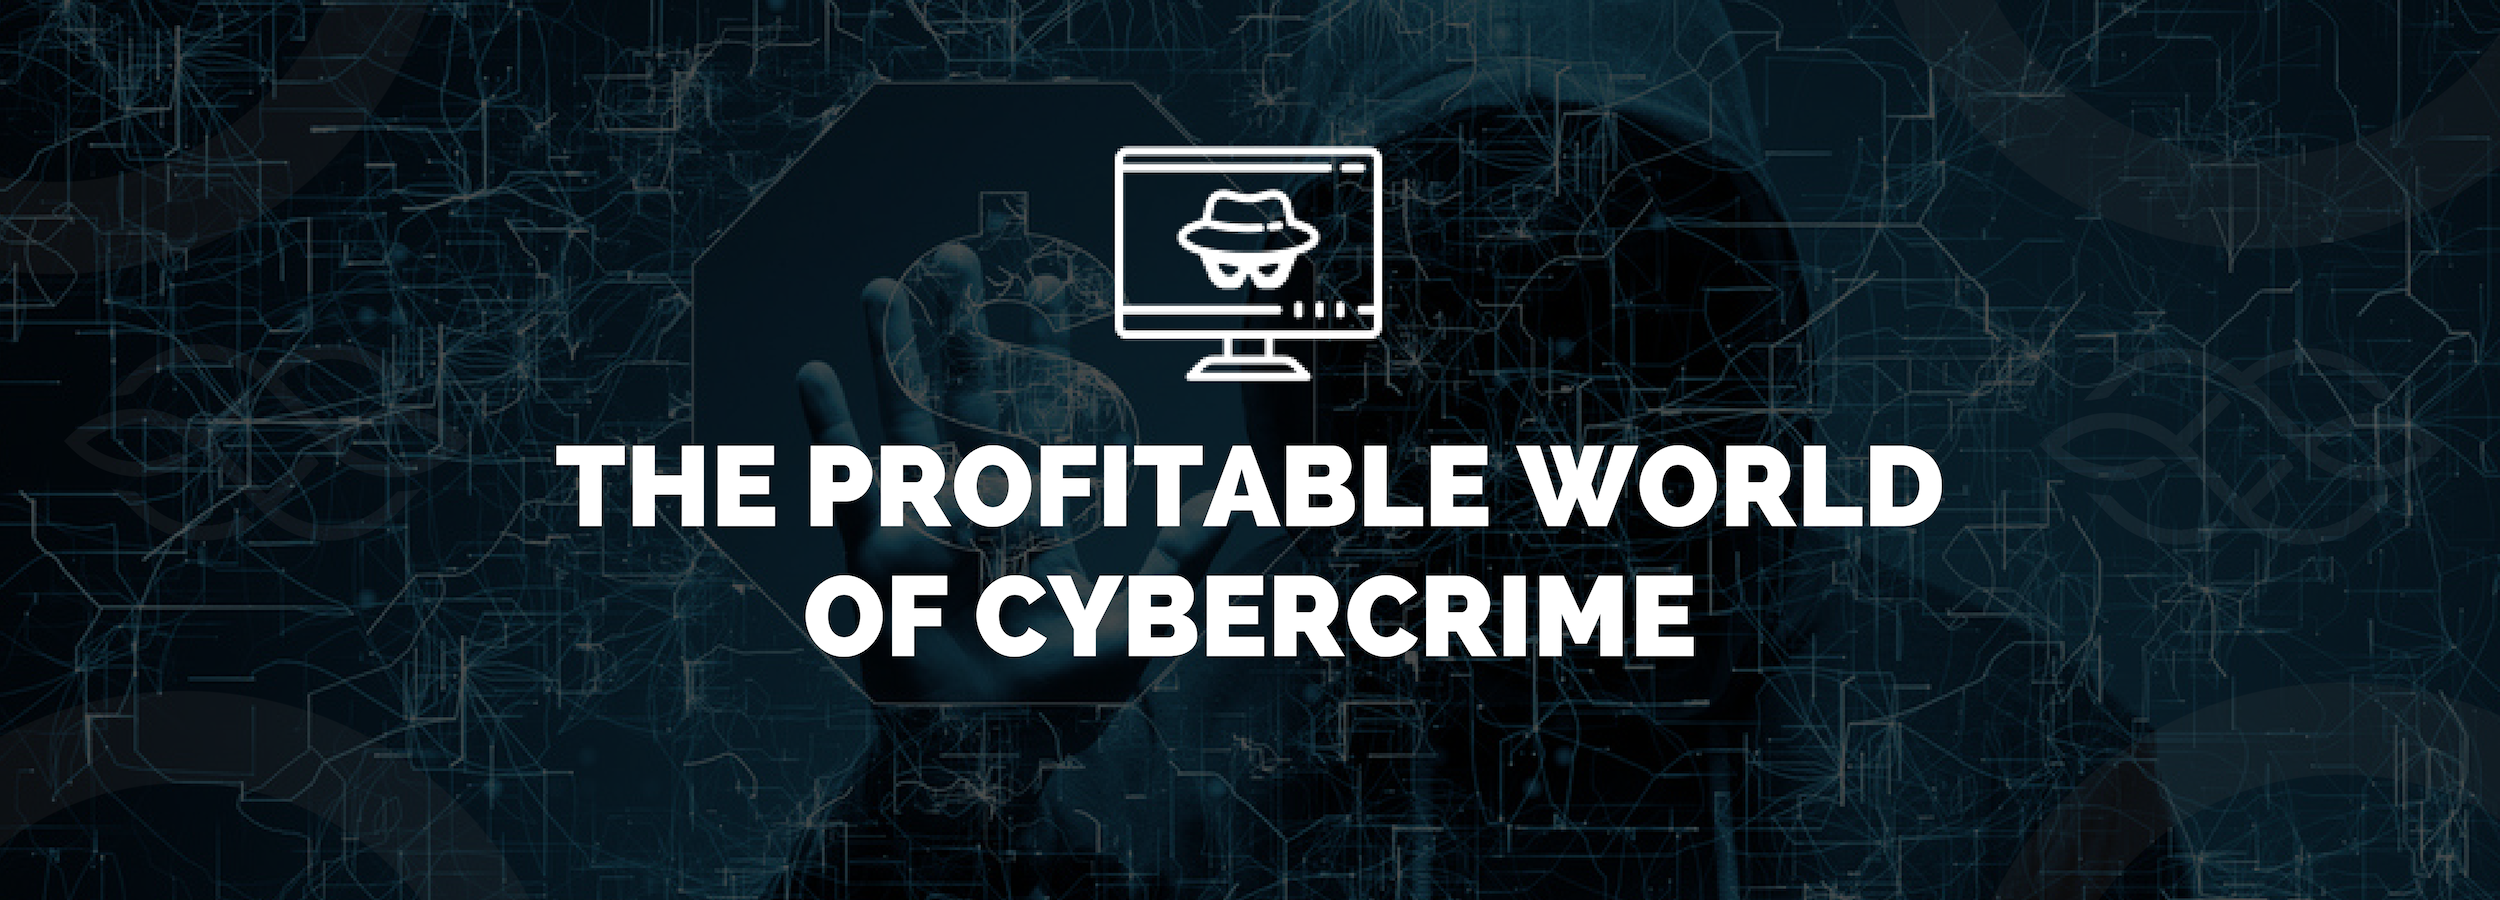 The Profitable World of Cybercrime